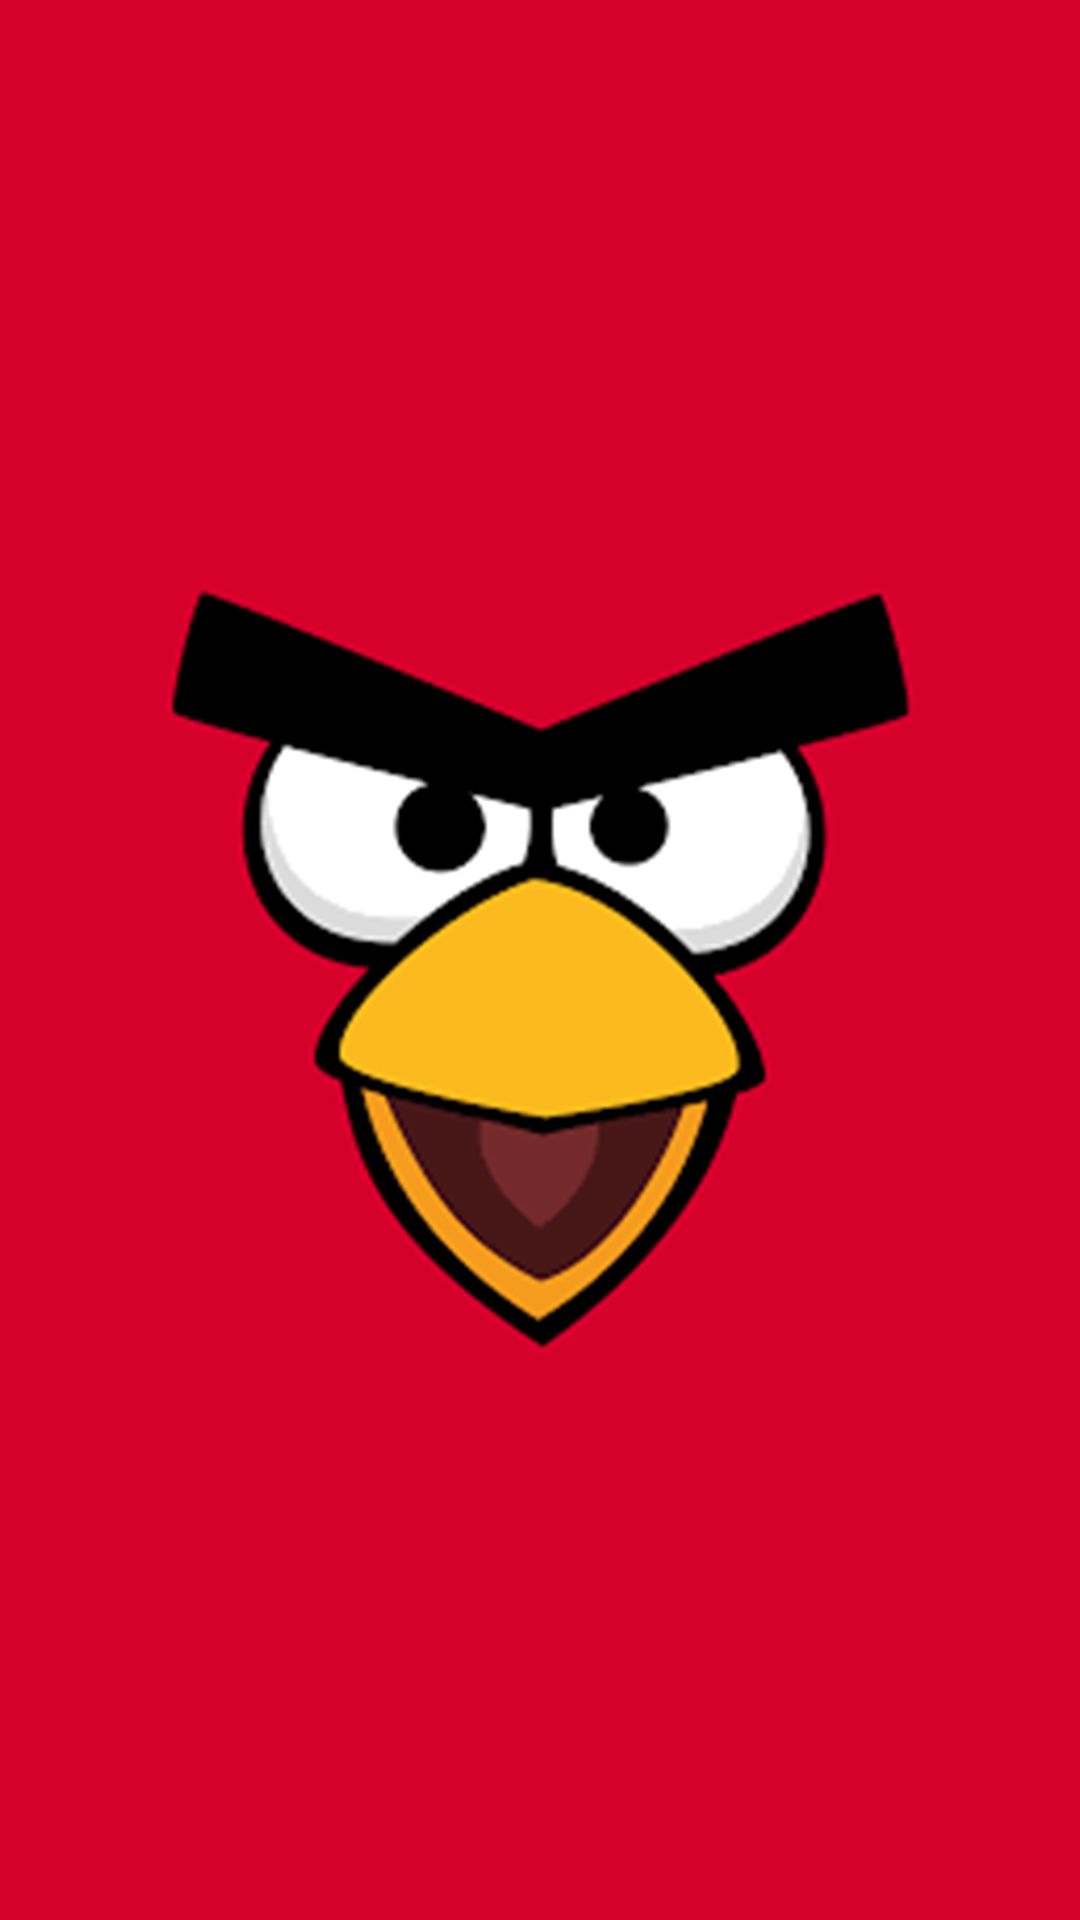 Angry Birds HD Samsung Galaxy Phone Wallpaper. Galaxy phone